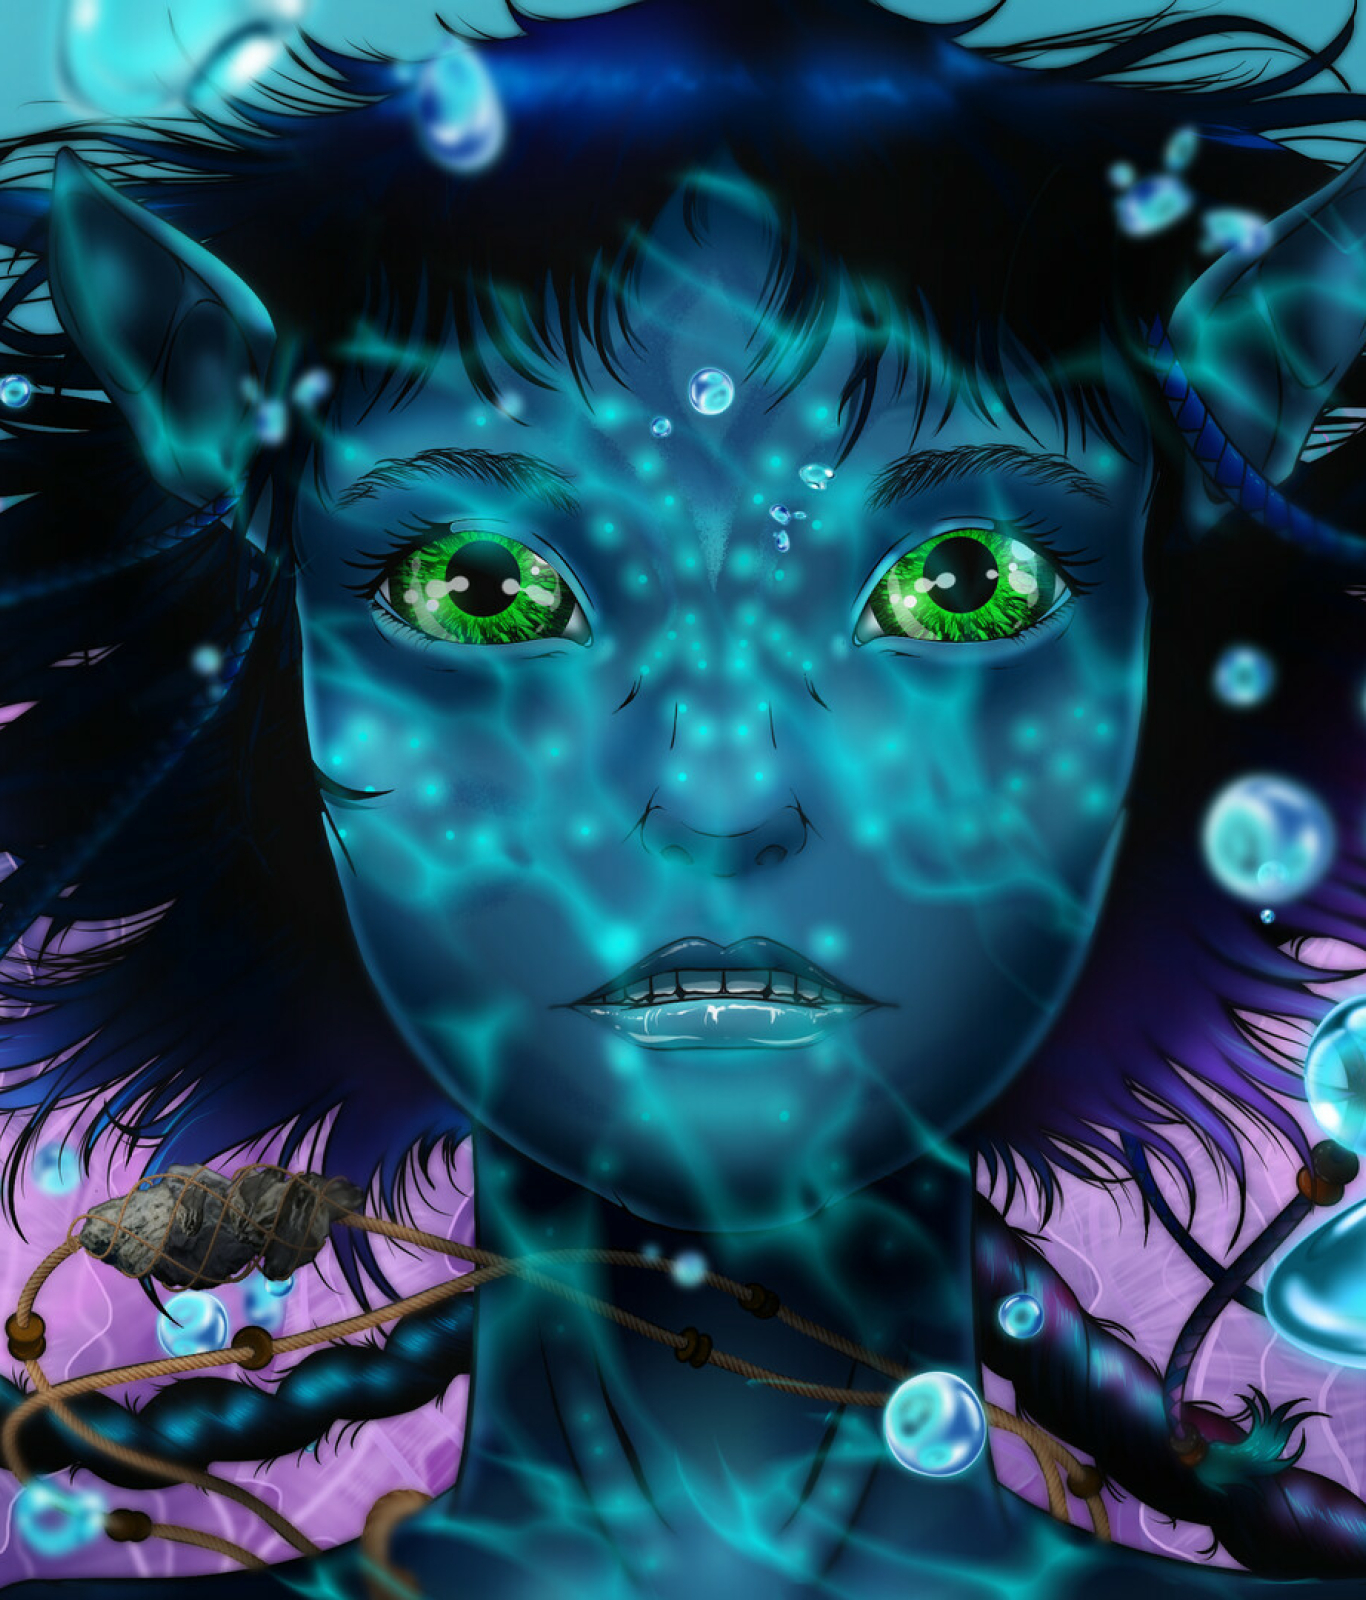 1366x1600 Cool Avatar The Way Of Water Digital Art 1366x1600 Resolution Wallpaper Hd Movies 4k